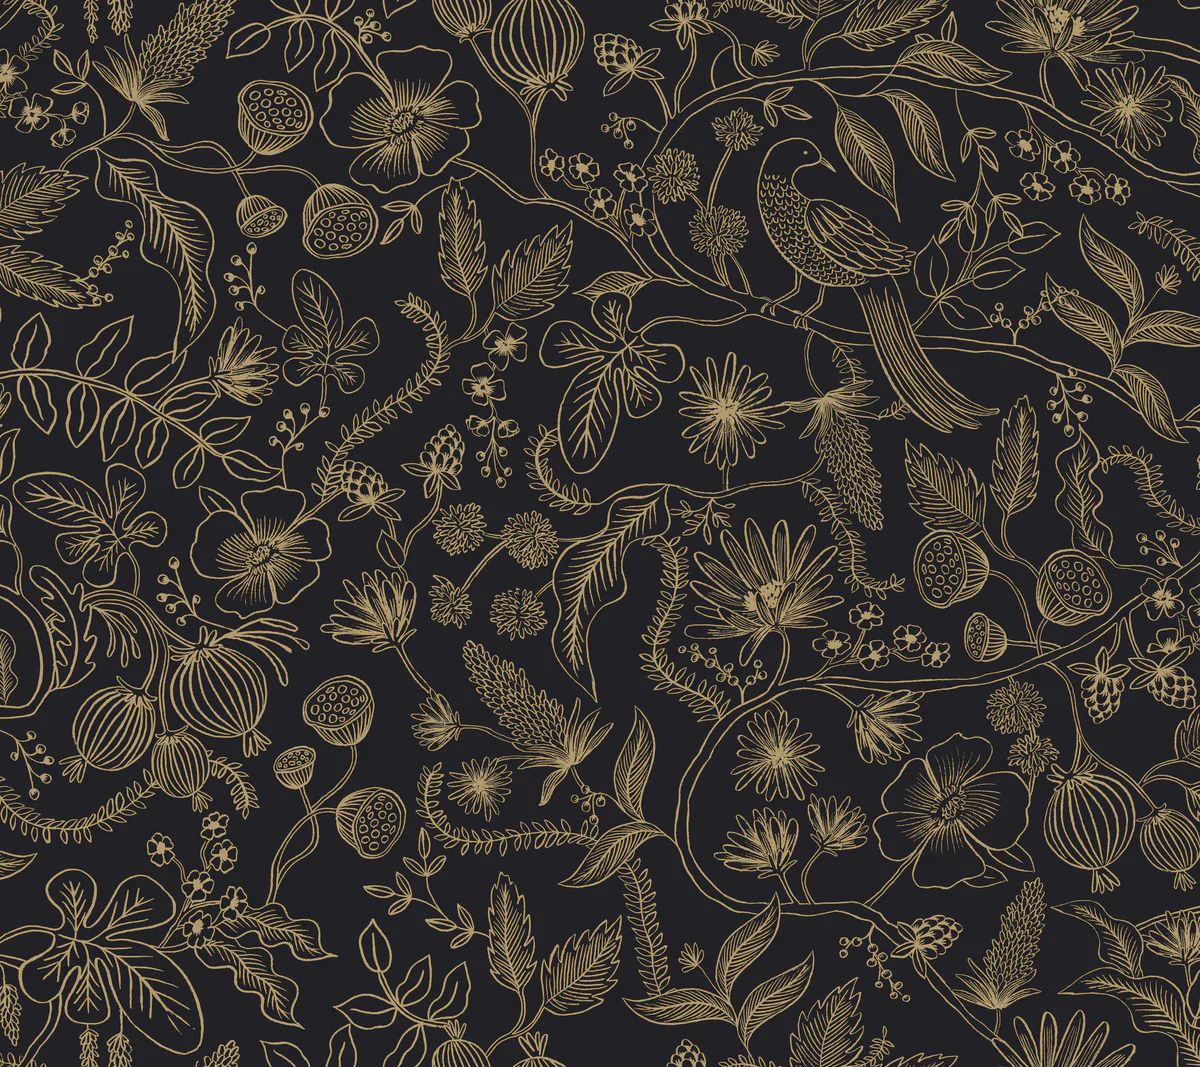 Aviary Peel & Stick Wallpaper in Black/Gold by York Wallcoverings | Burke Decor